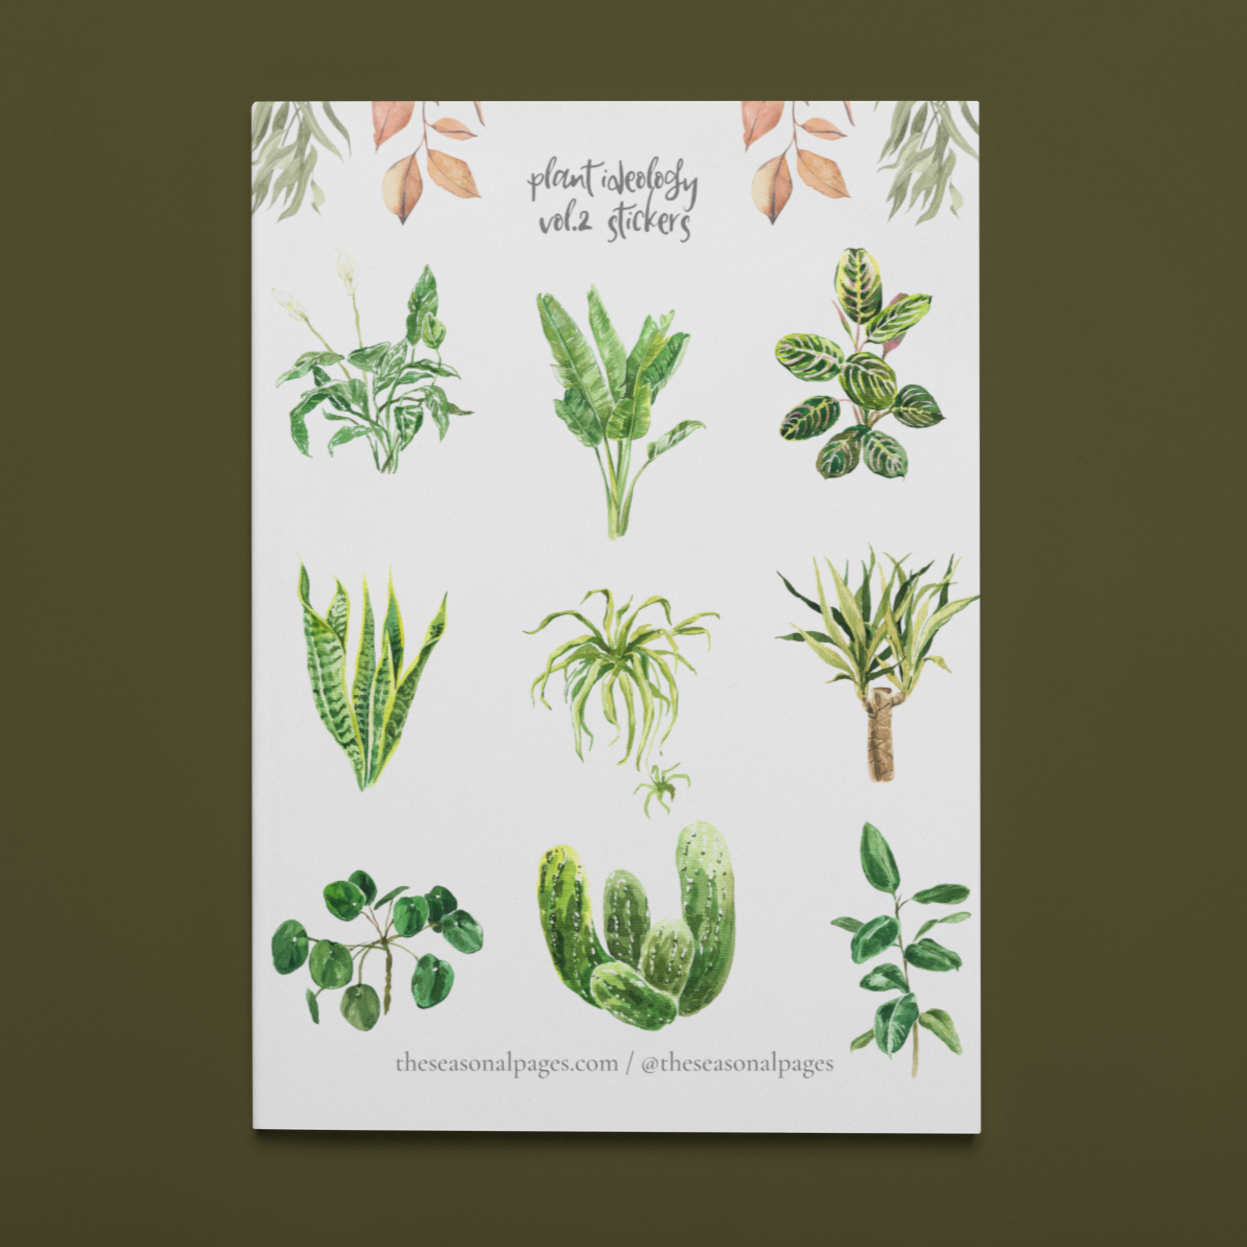 Printable Plant Ideology Vol.2 Sticker Set